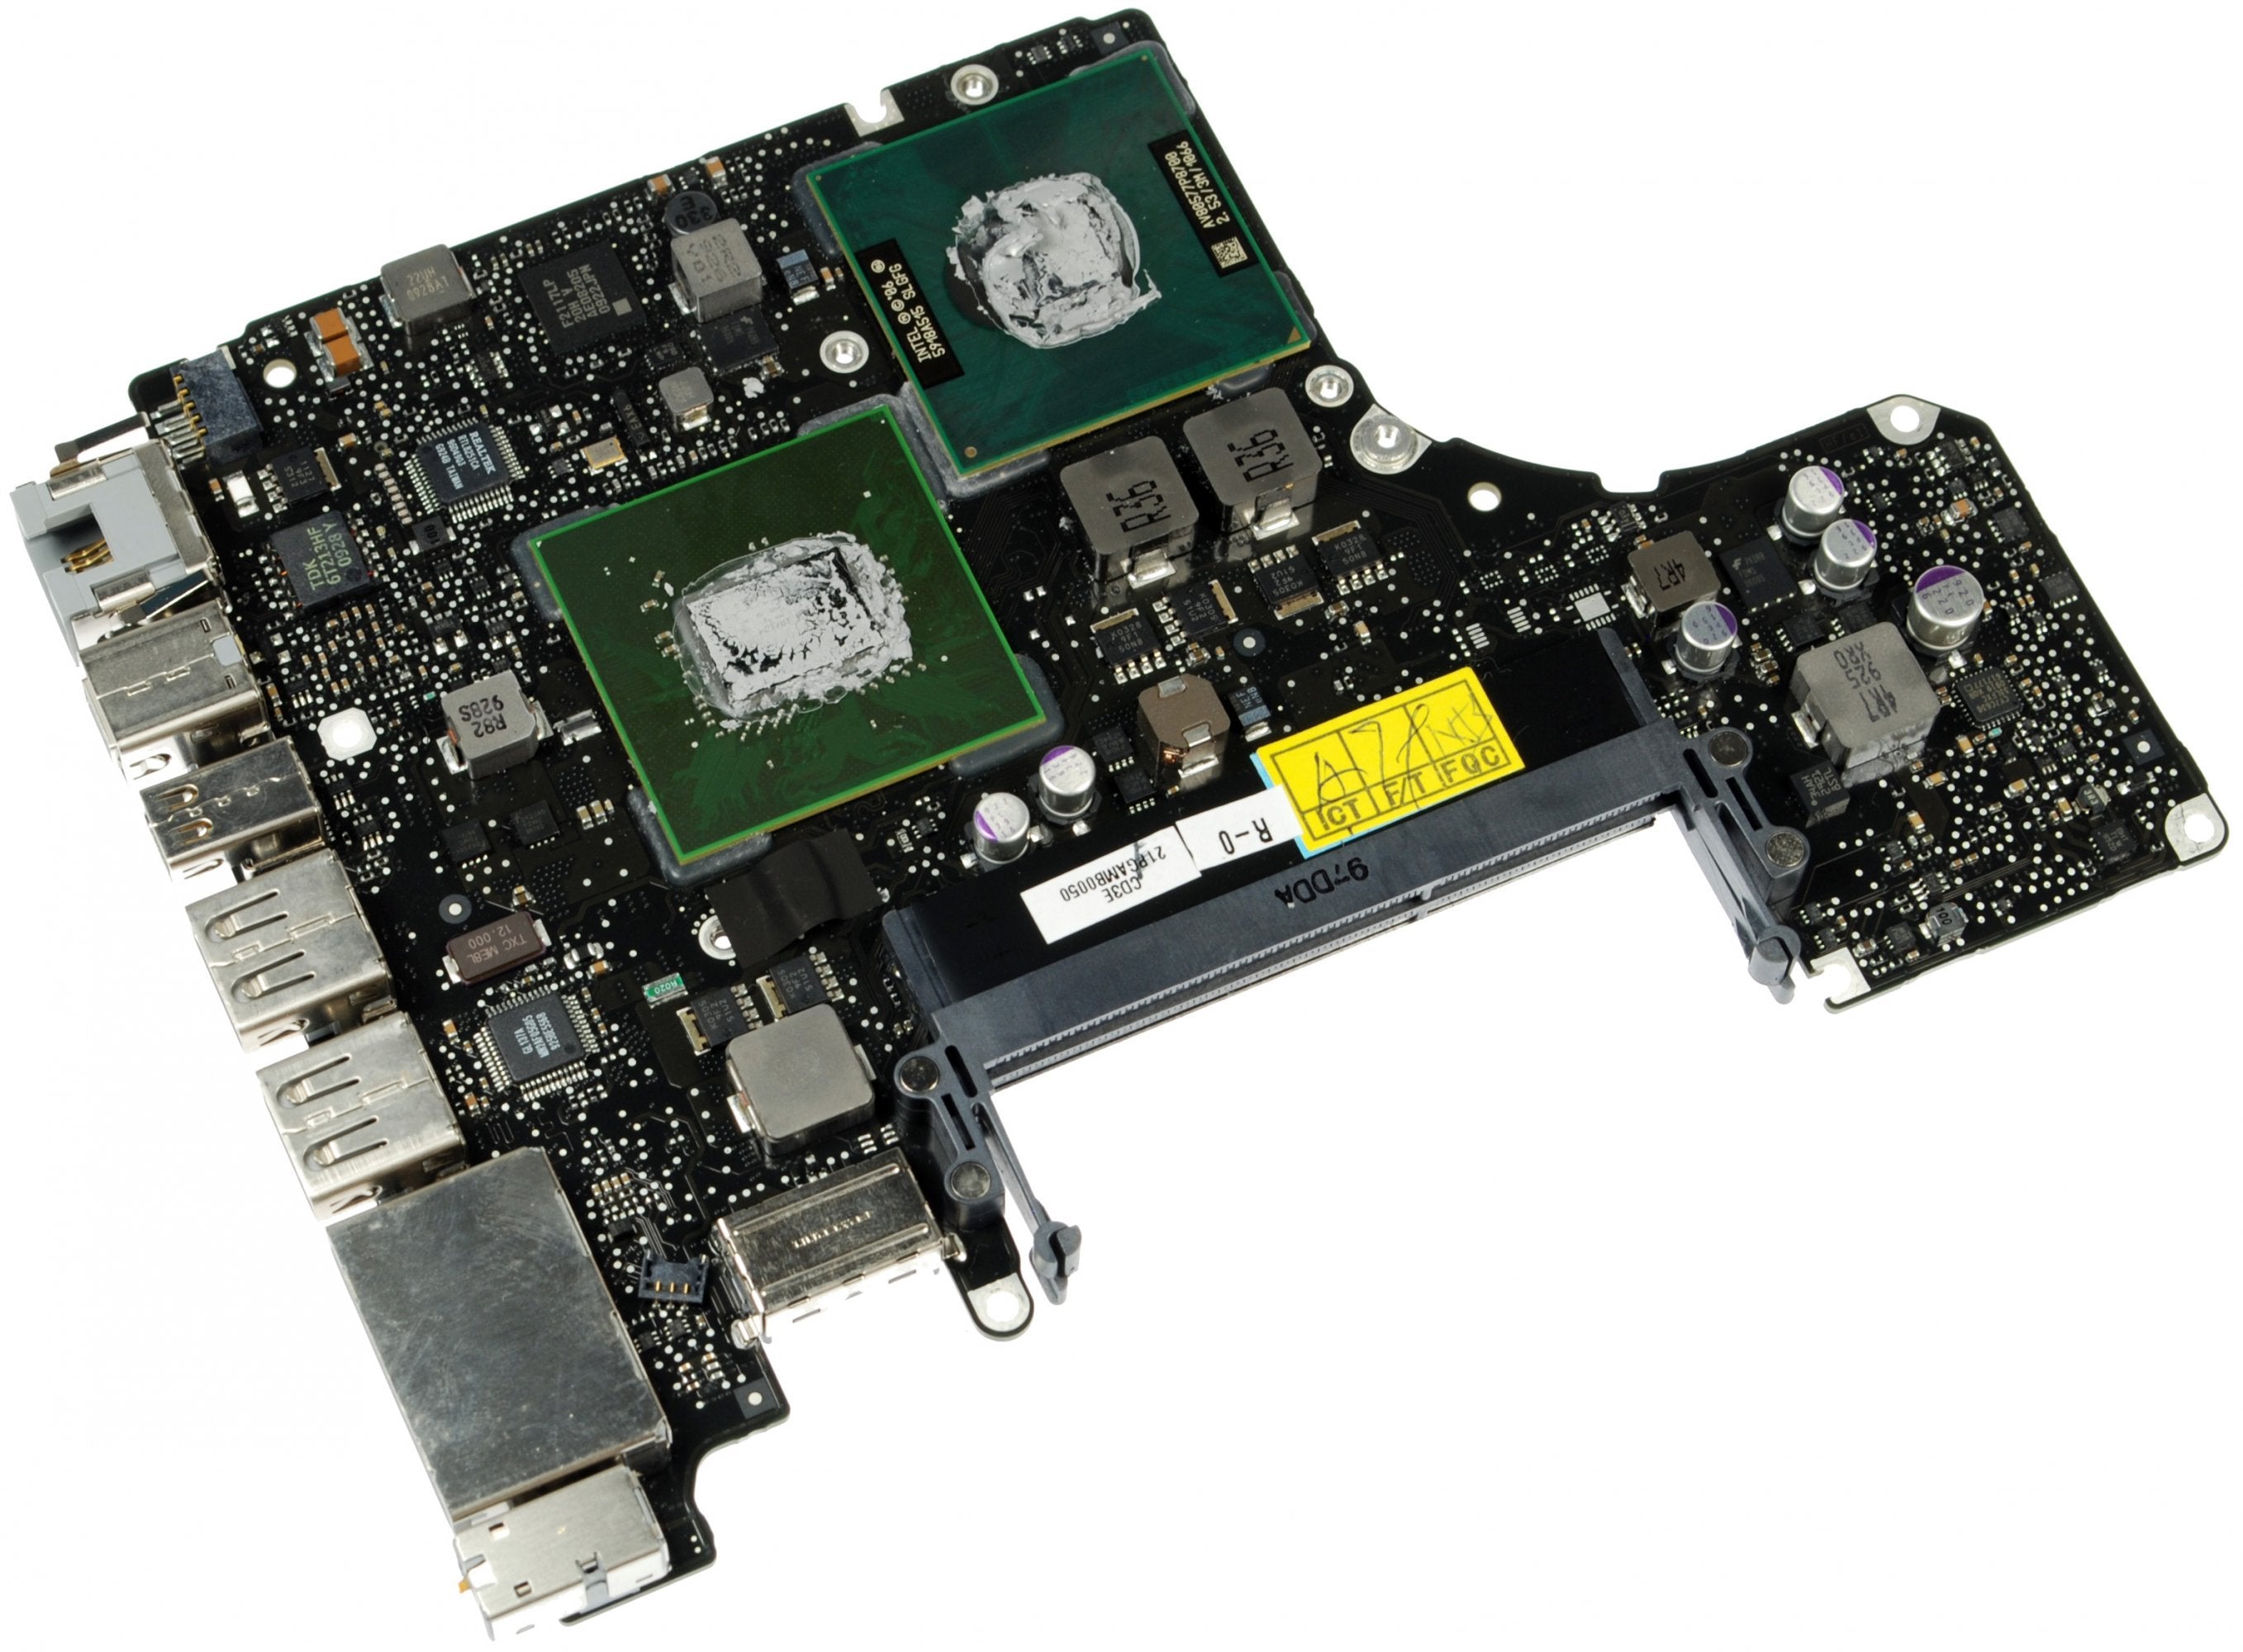 MacBook Pro 13" Unibody (Mid 2009) 2.53 GHz Logic Board